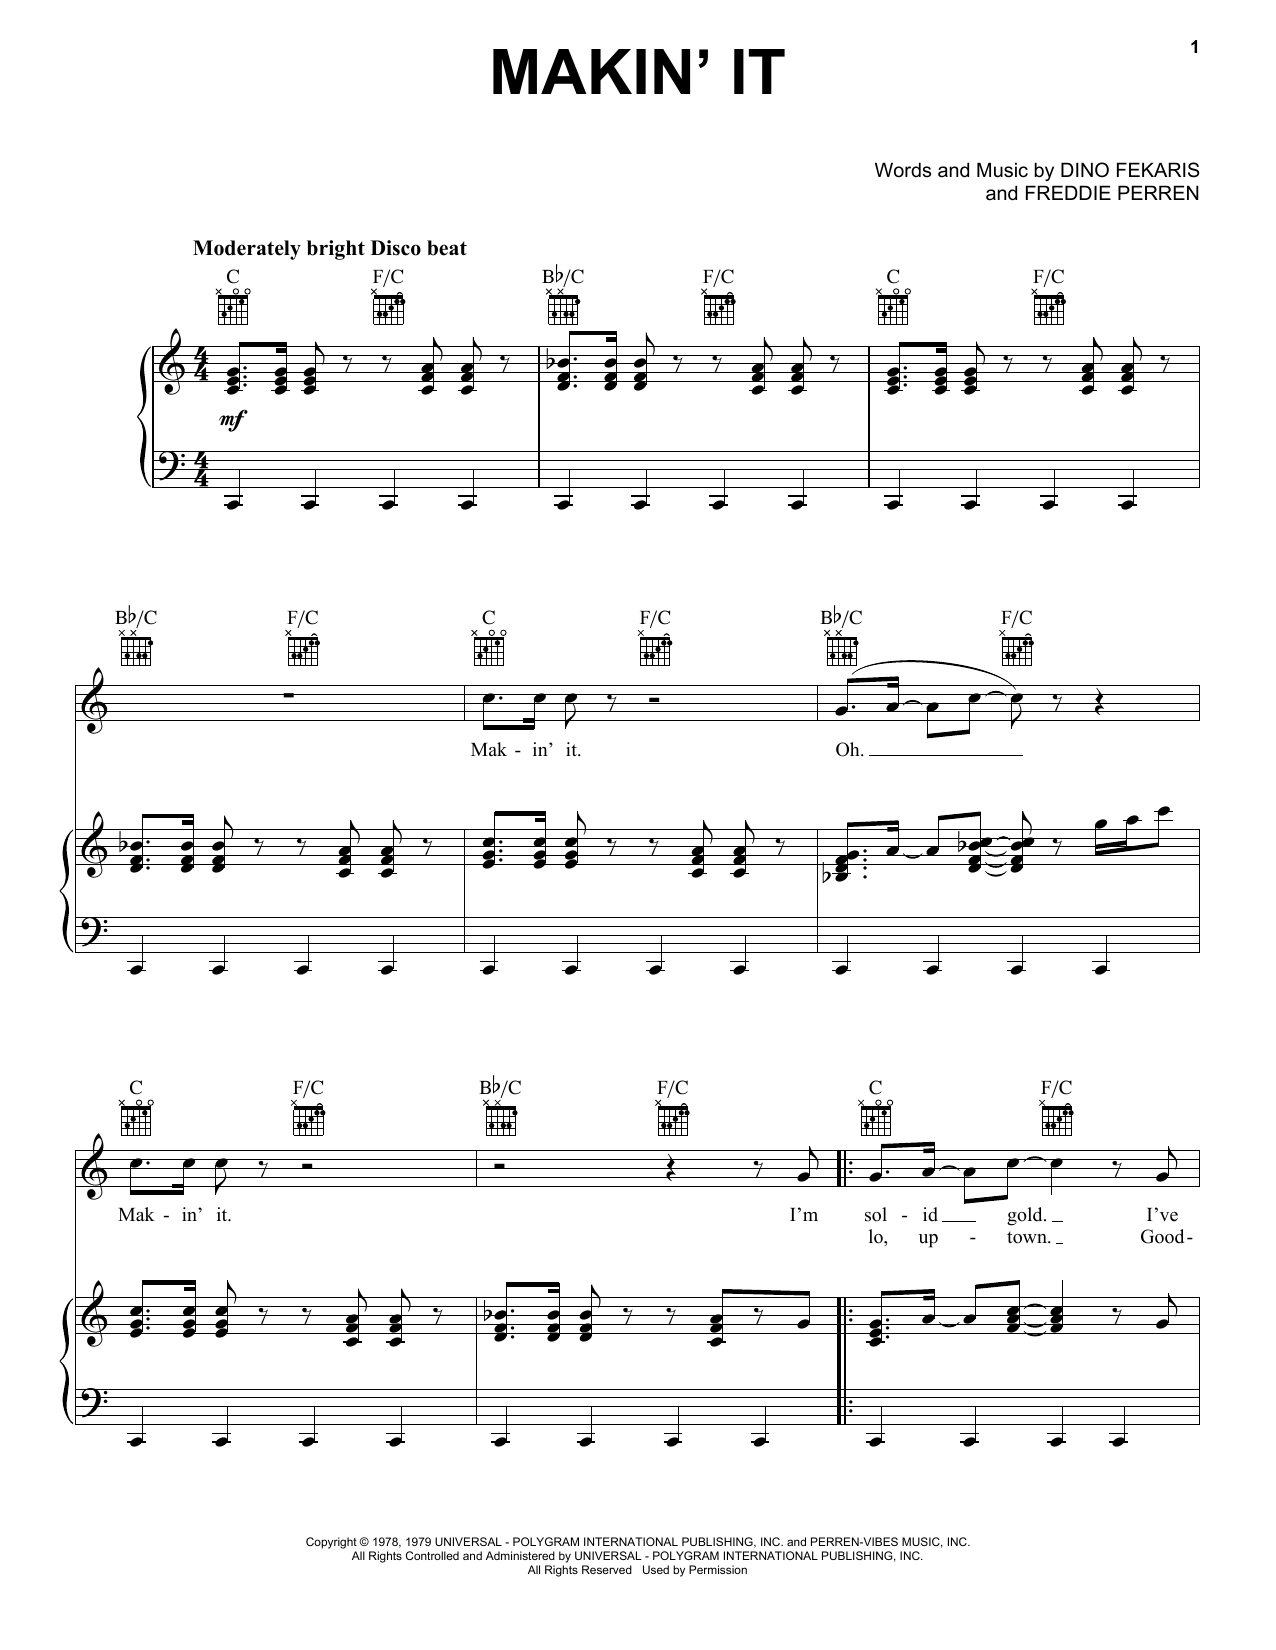 David Naughton Makin' It Sheet Music Notes & Chords for Piano, Vocal & Guitar Chords (Right-Hand Melody) - Download or Print PDF